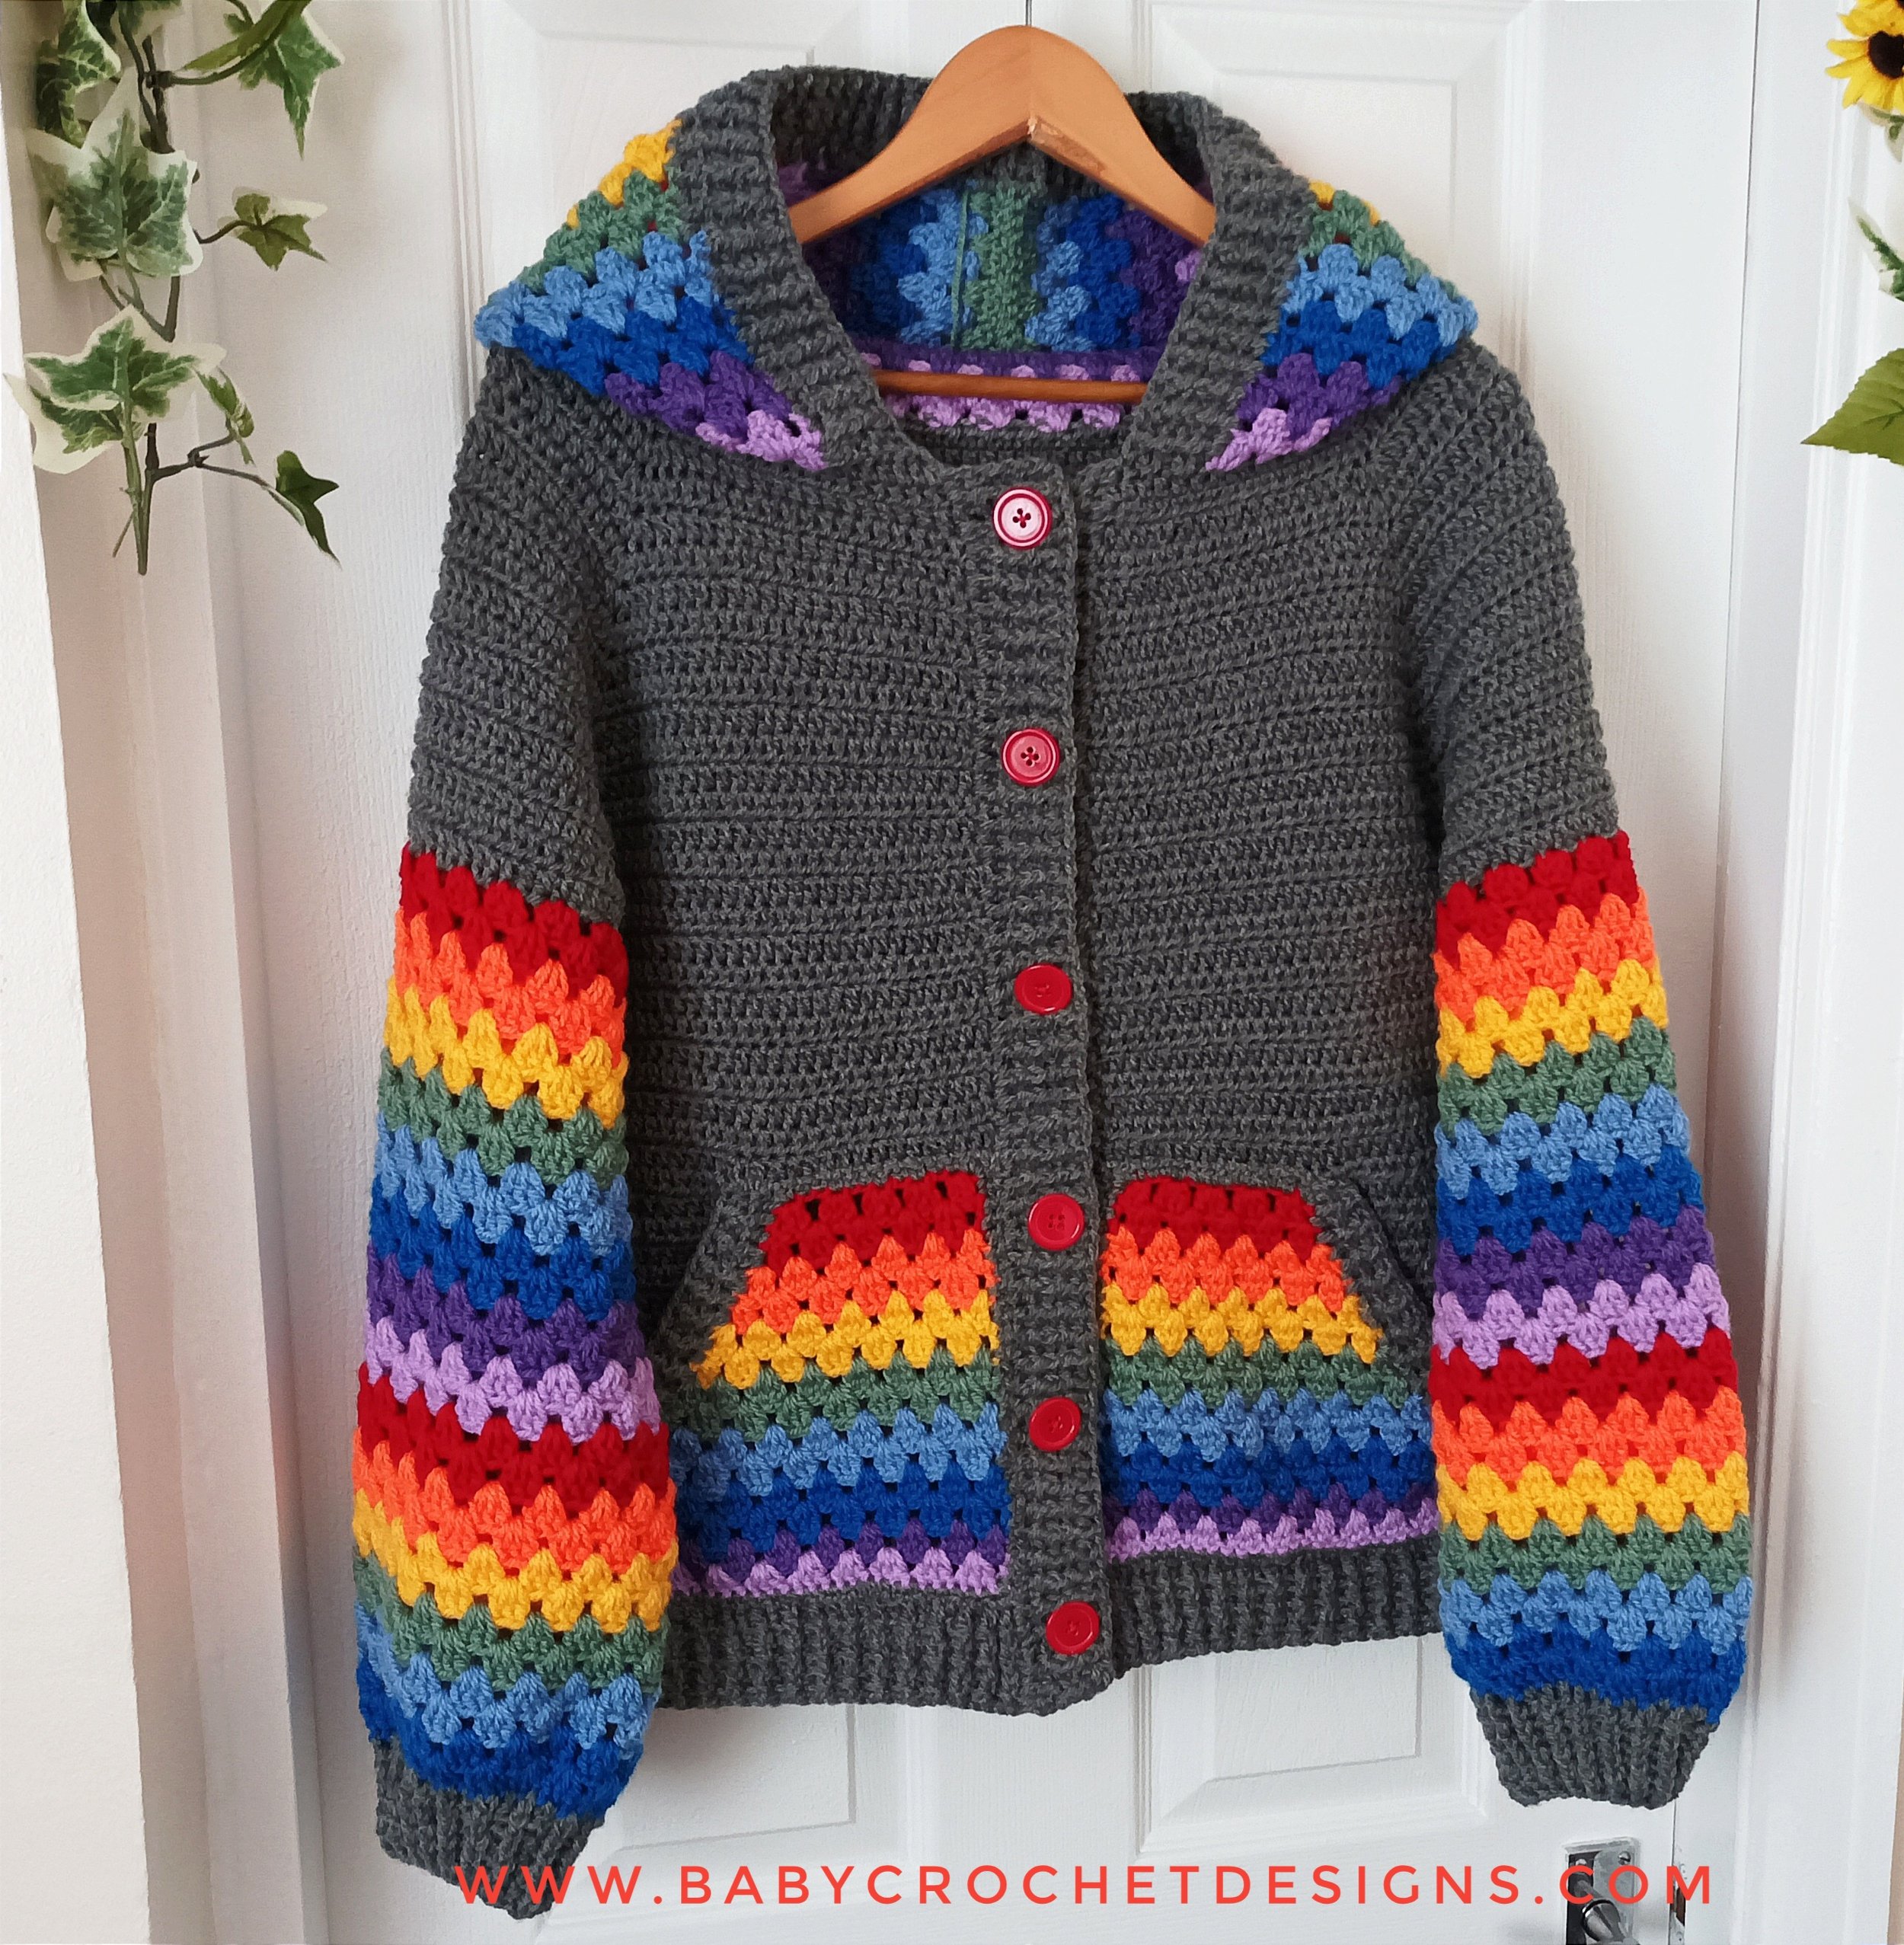 Baby Crochet Designs